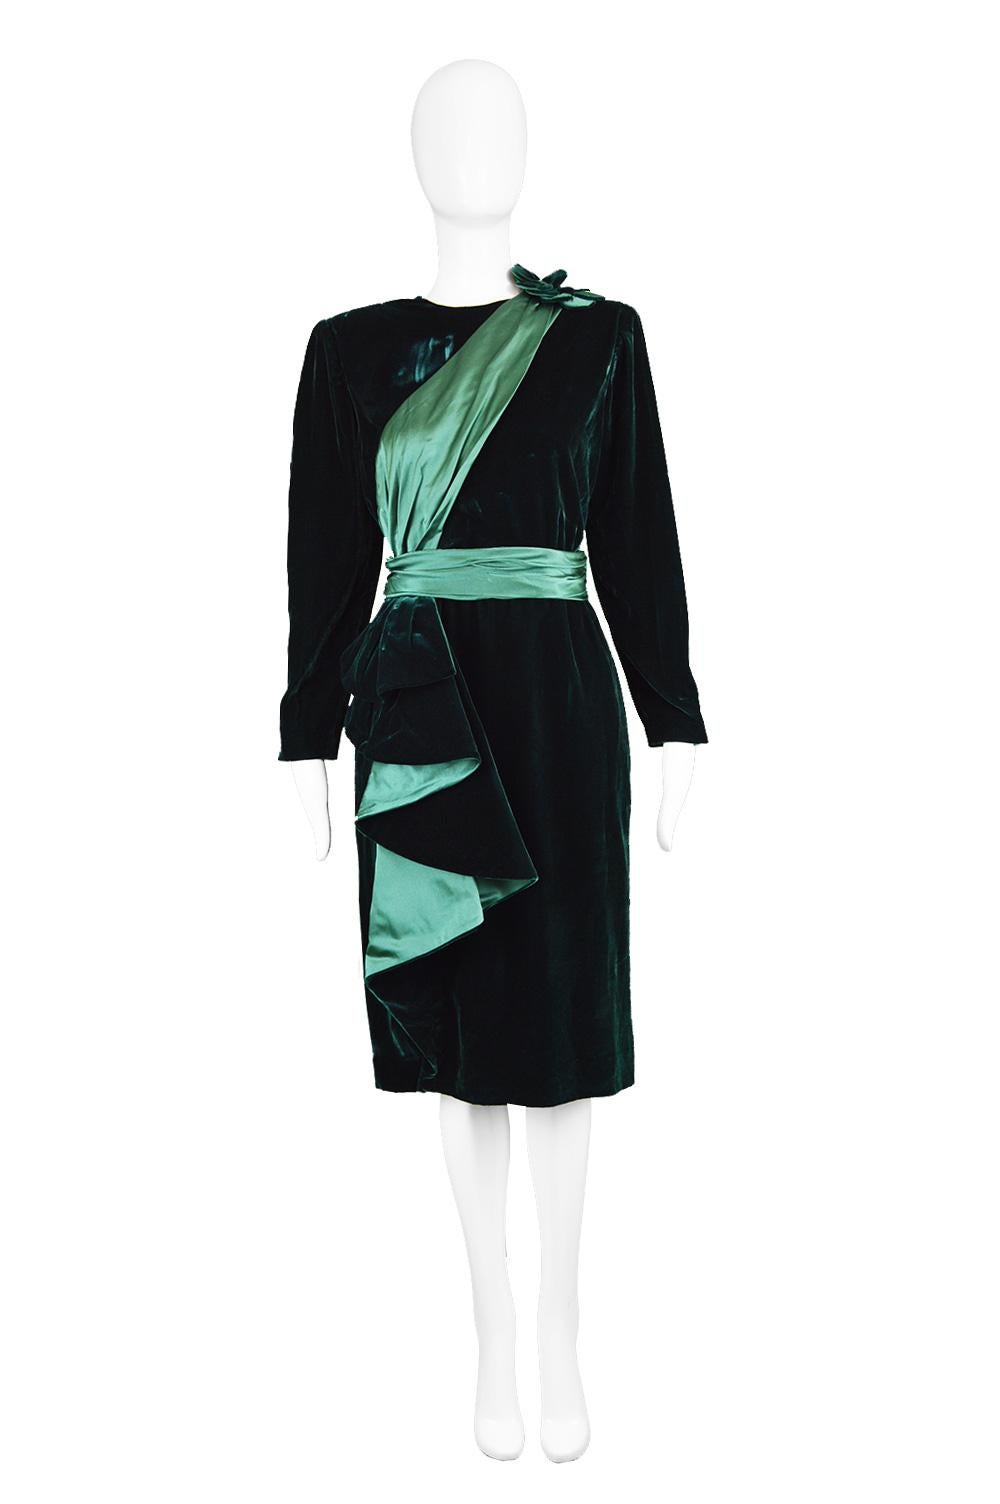 Nina Ricci Vintage Dark Green Velvet Swag Detail Evening Dress, 1980s

Estimated Size: roughly a UK 12-14/ US 8-10/ EU 40-42. Please check measurements. 
Bust - 38” / 96cm
Waist - 30” / 76cm
Hips - 40” / 101cm
Length (Shoulder to Hem) - 41” /